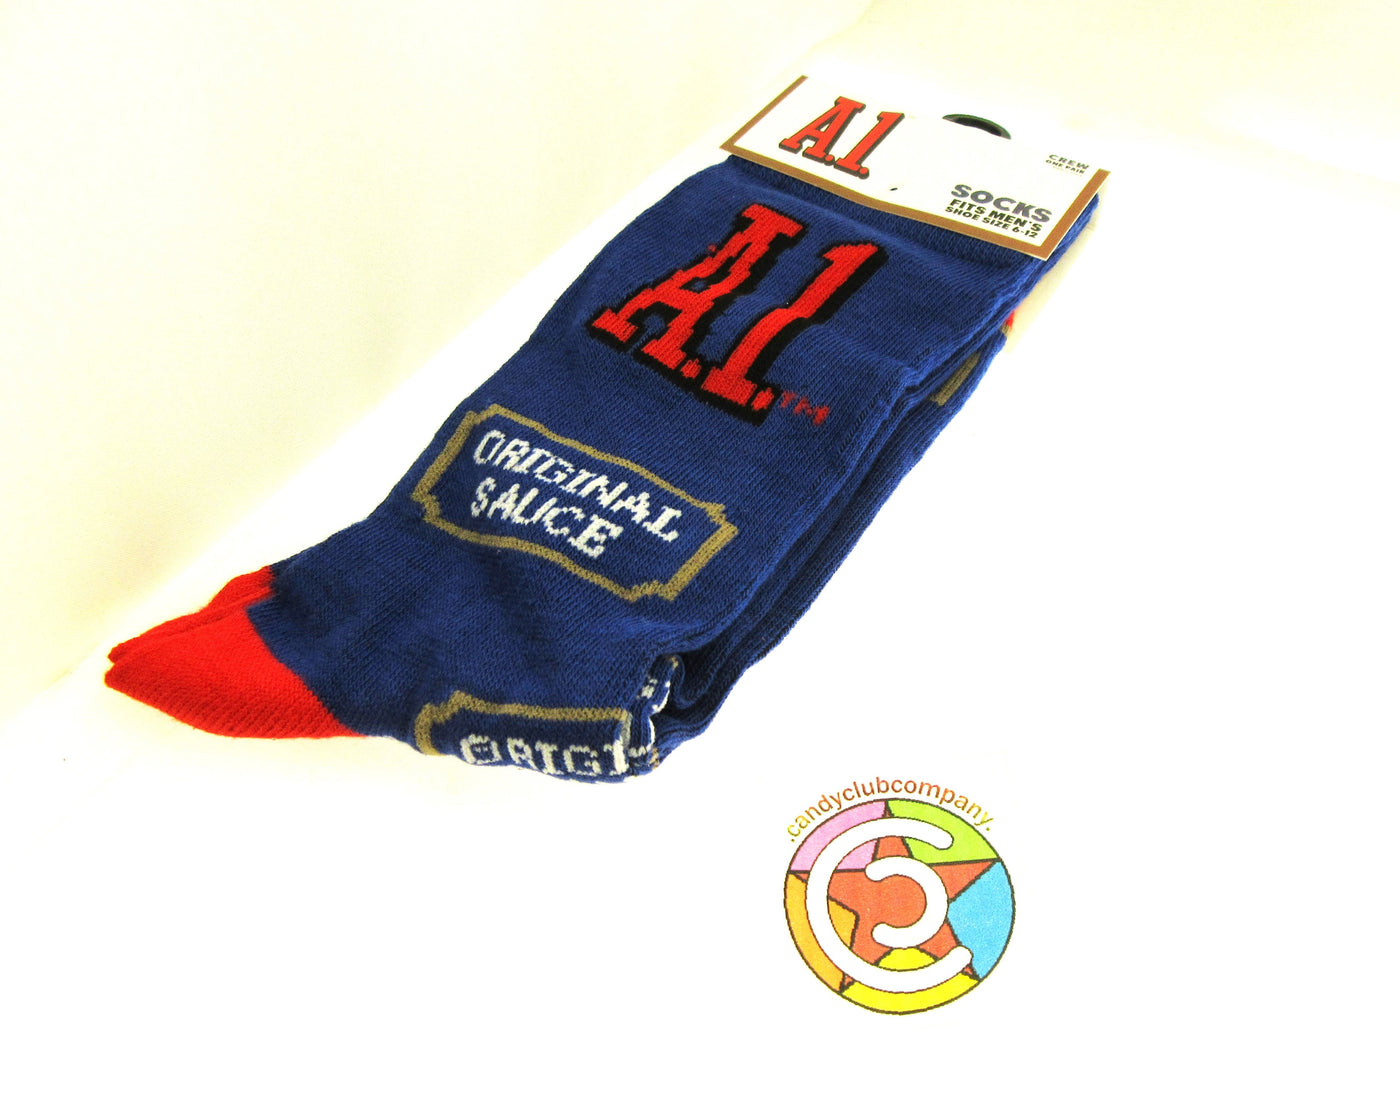 One Pair of A1 Original Sauce Crew Socks for Men Shoe Sizes 6 - 12